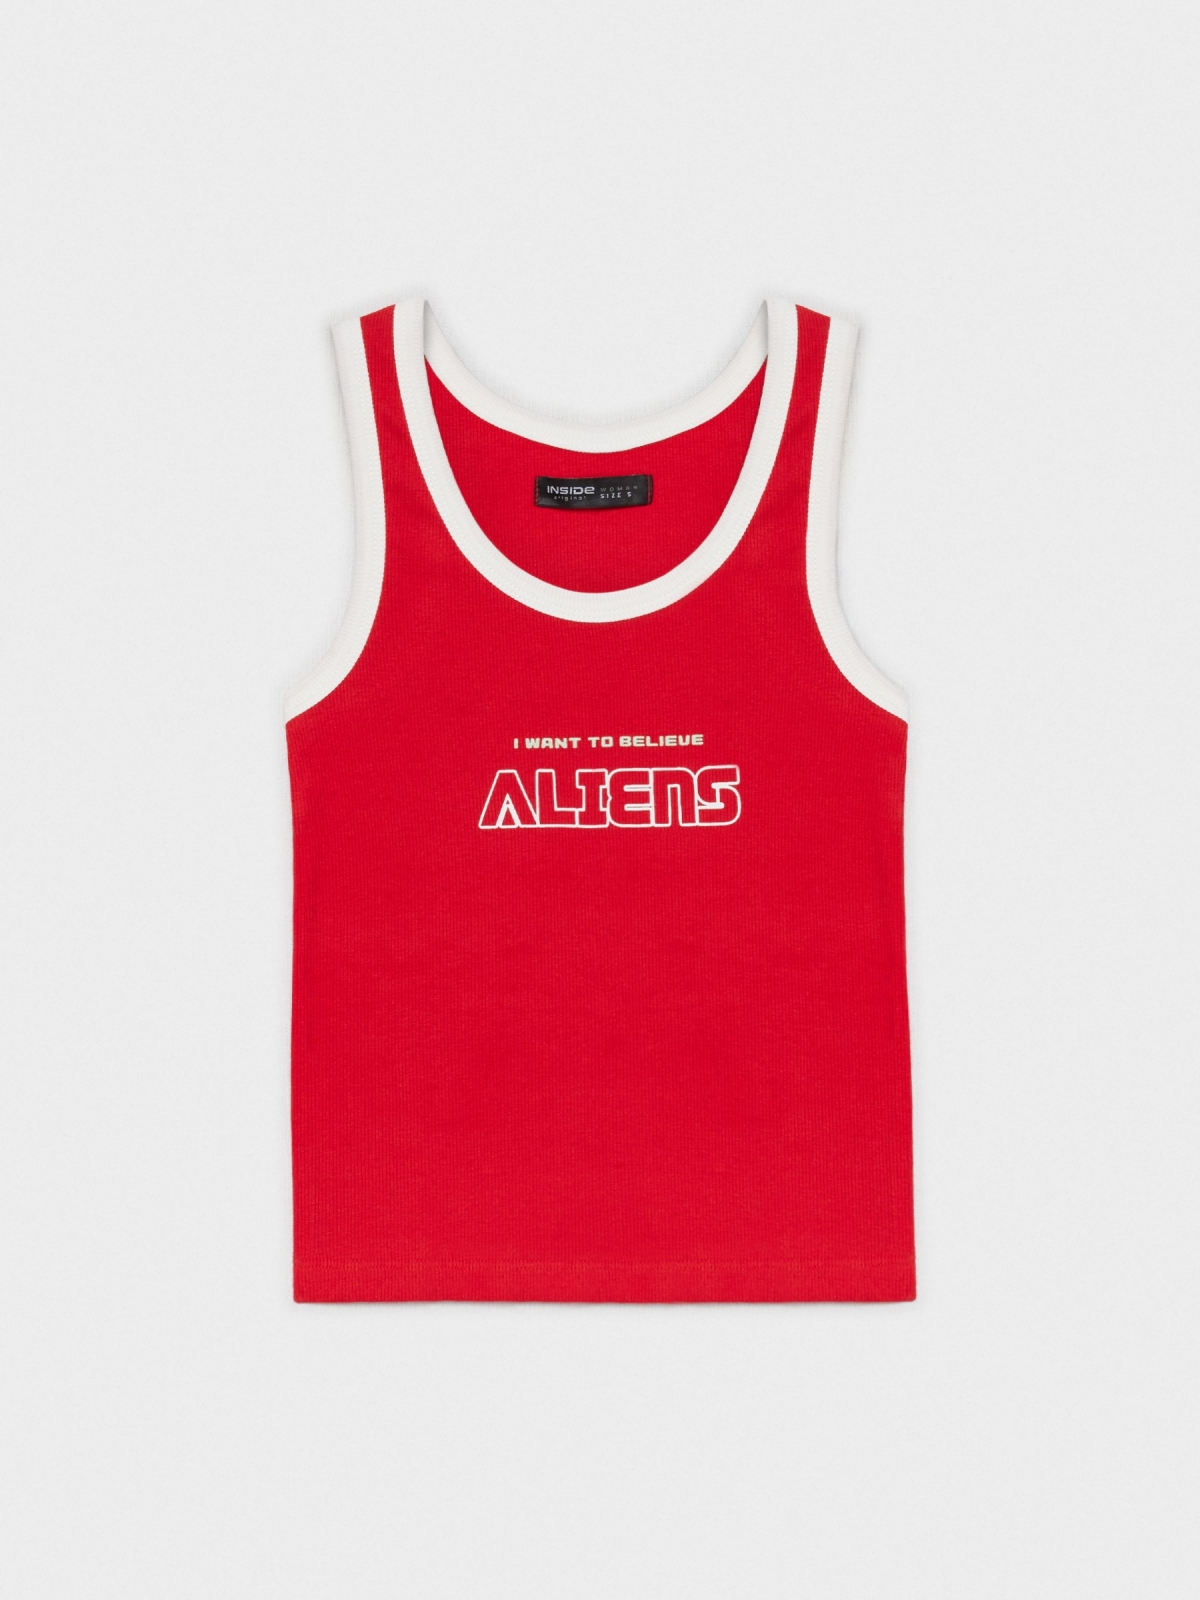  Camiseta Aliens rojo